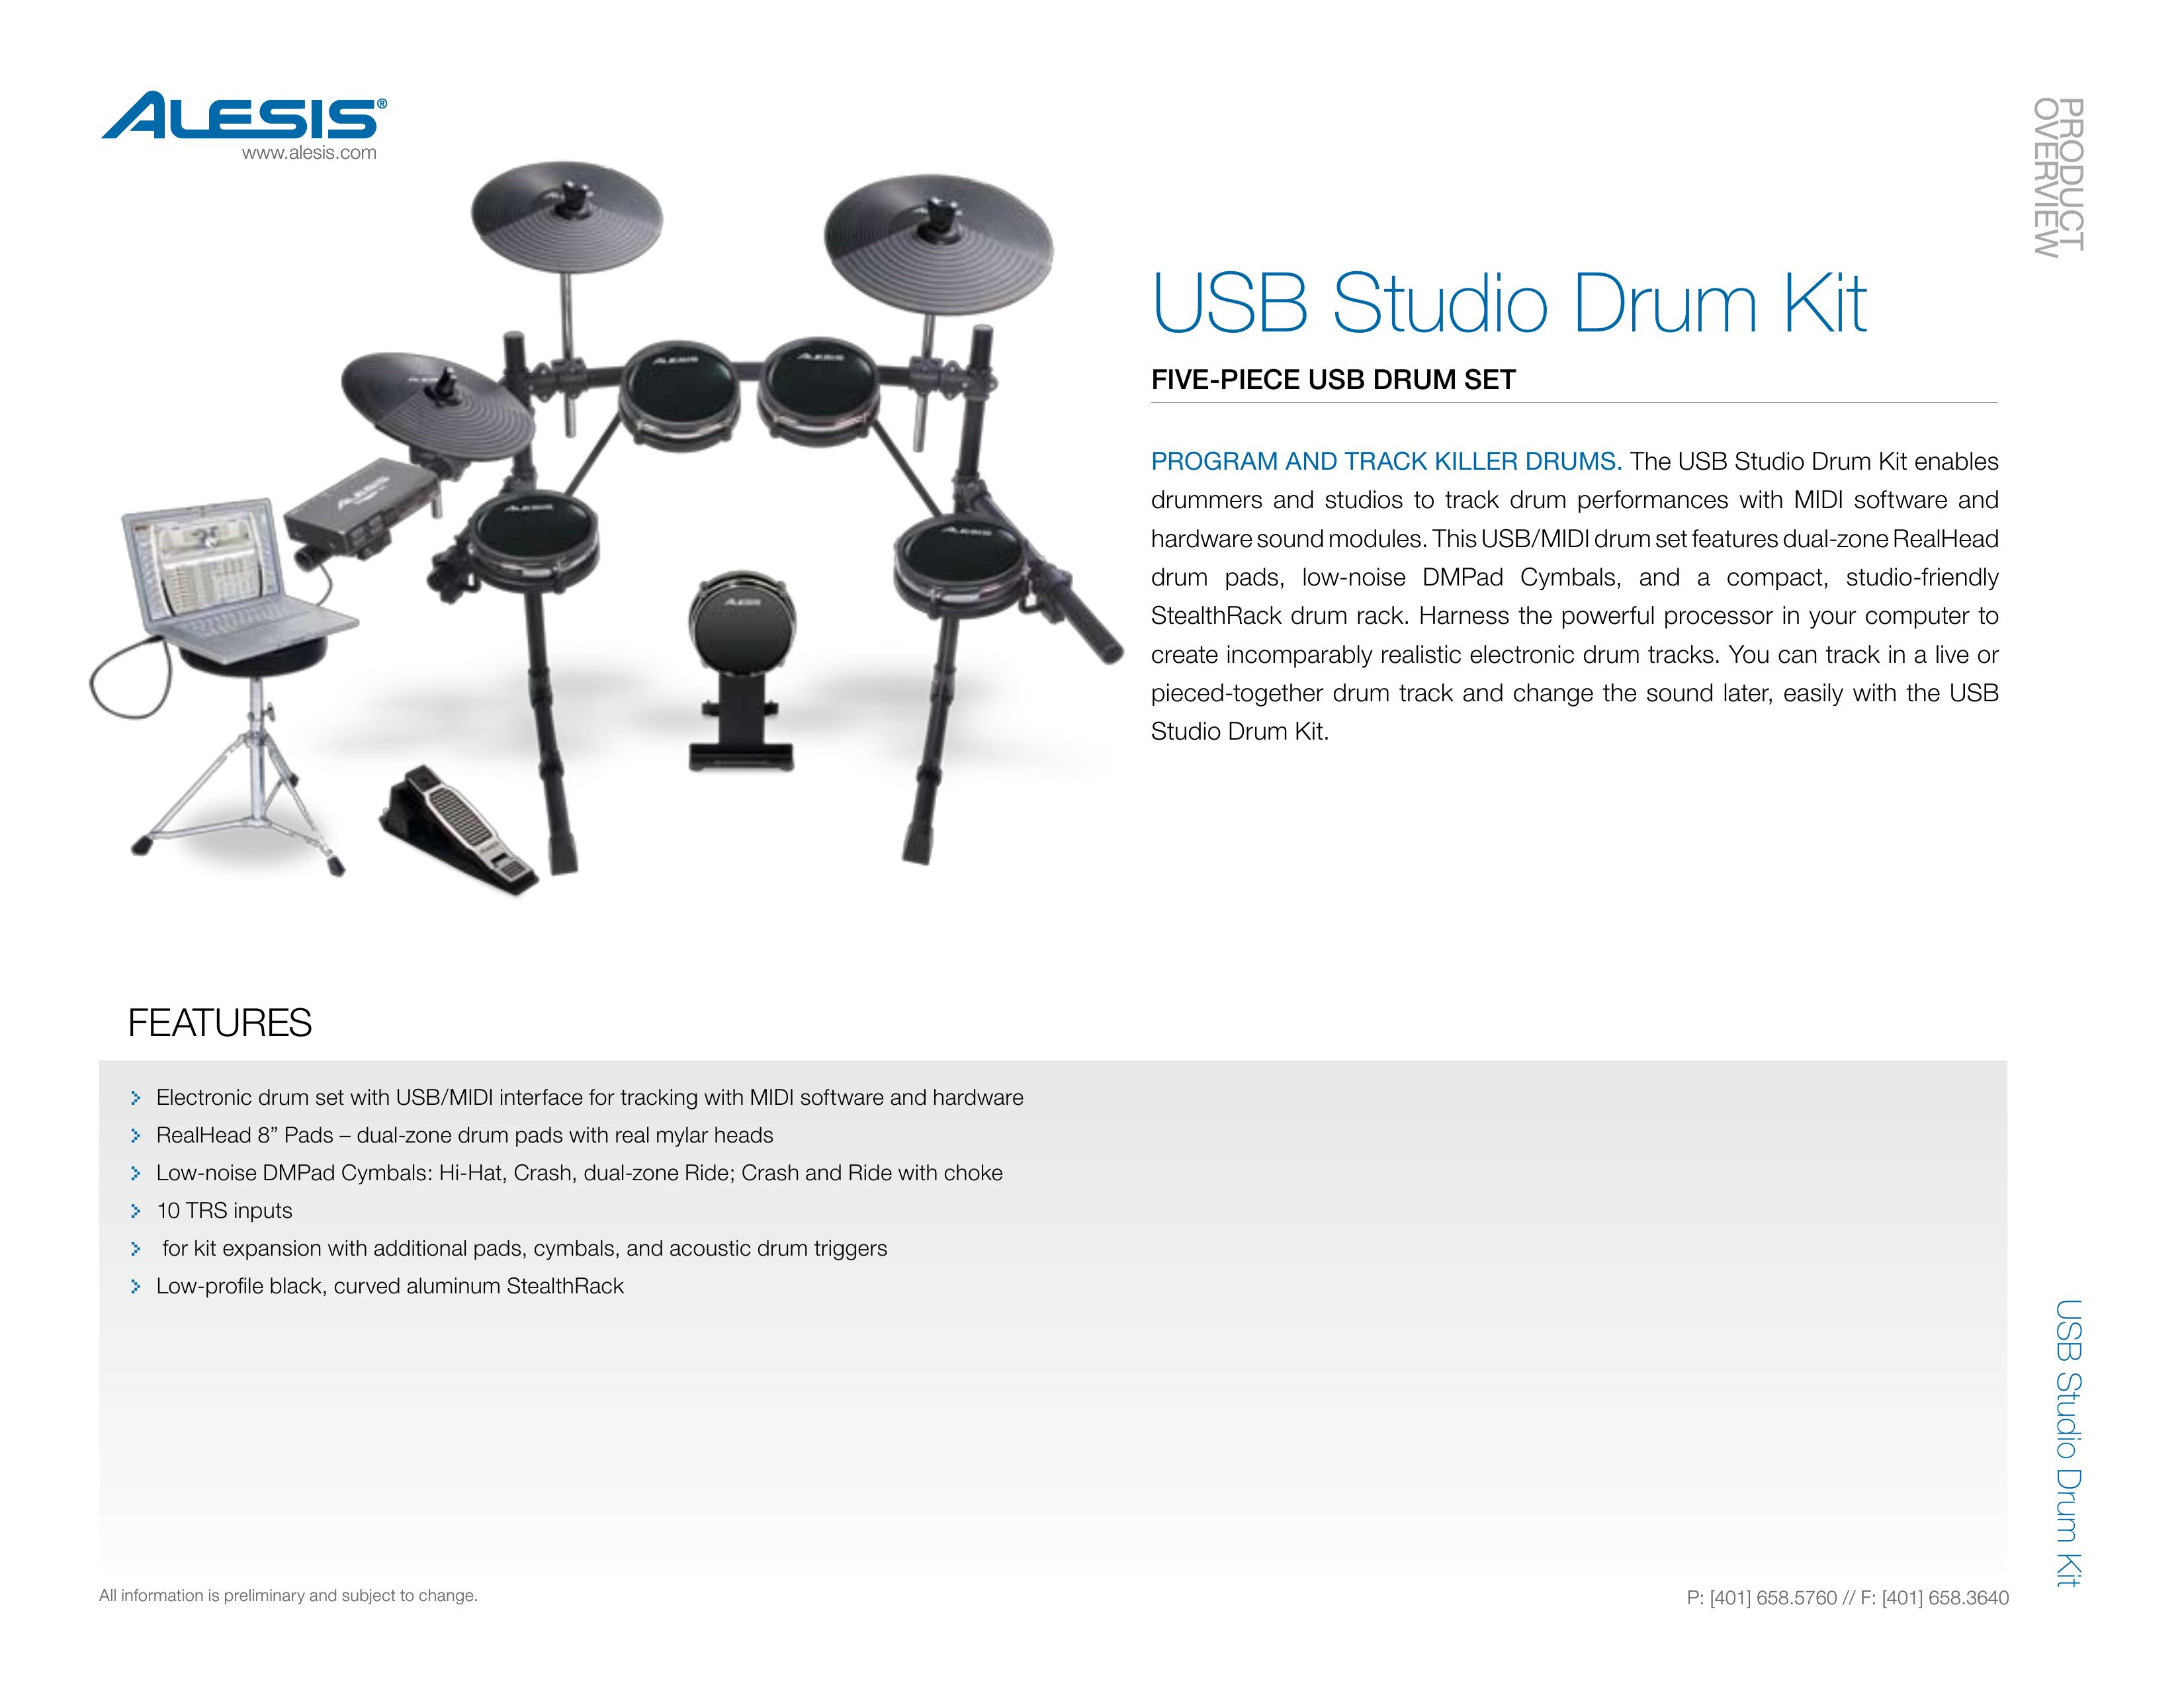 Alesis USB Studio Drum Kit Drums User Manual